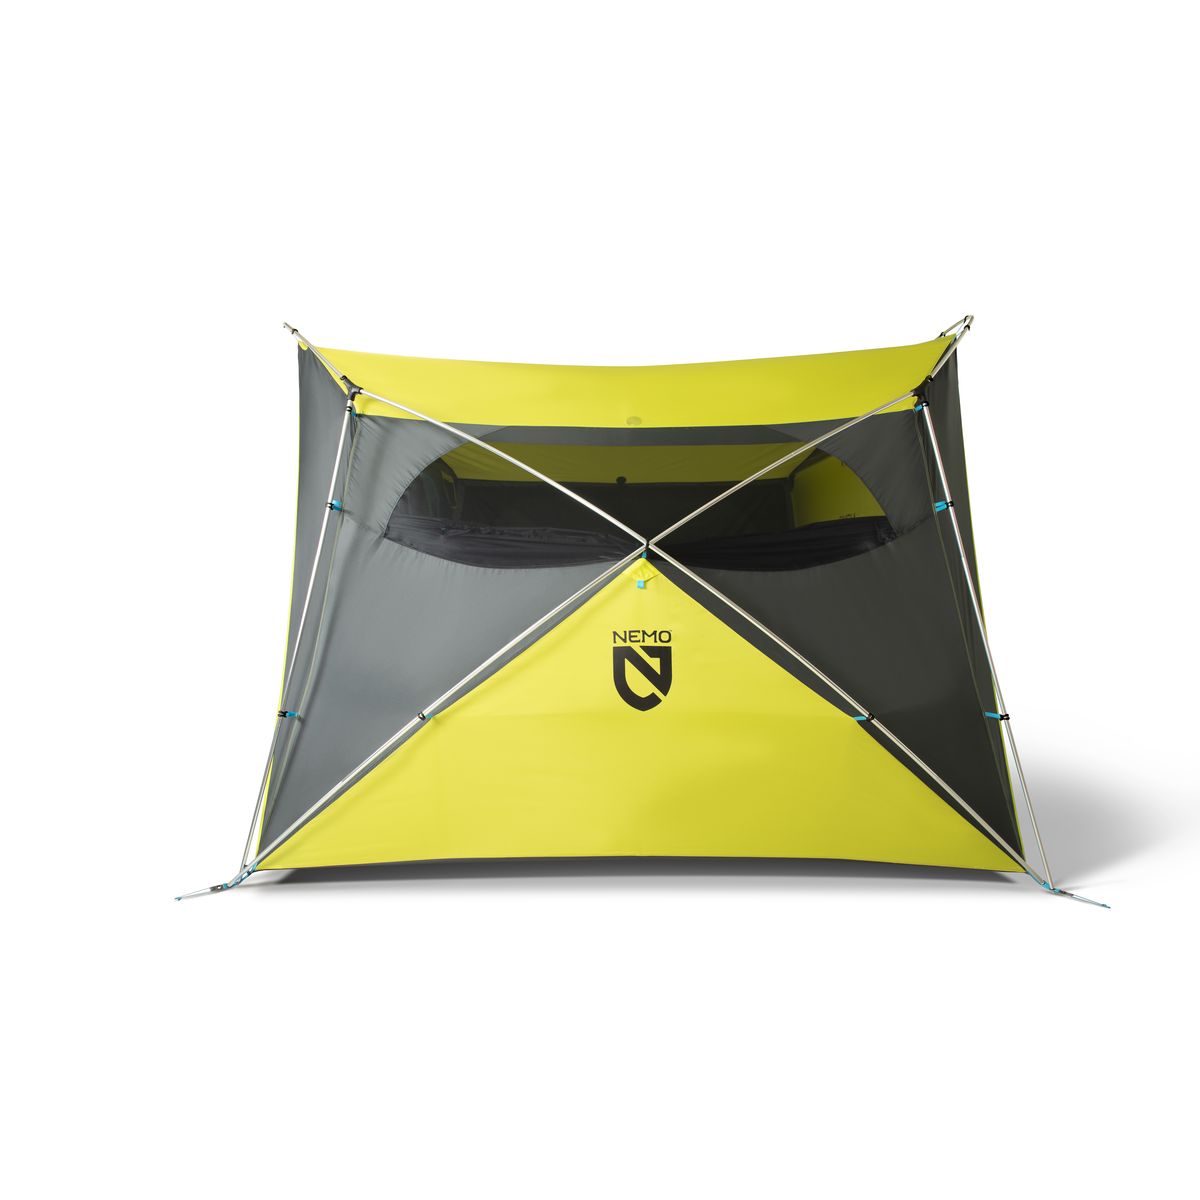 NEMO Wagontop 4P Family Camping Tents